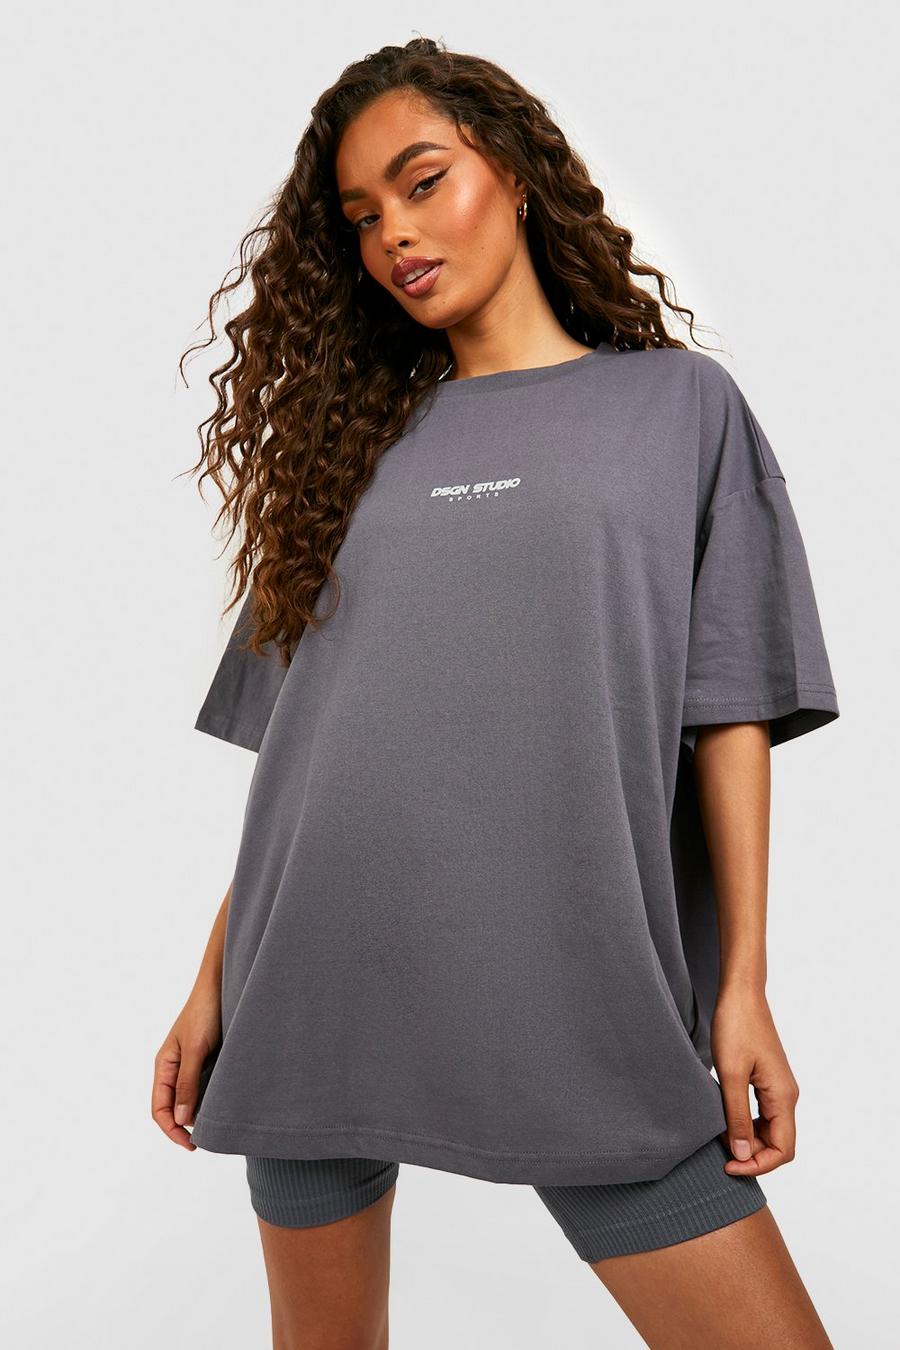 T-shirt oversize con slogan Dsgn Studio Sports, Charcoal